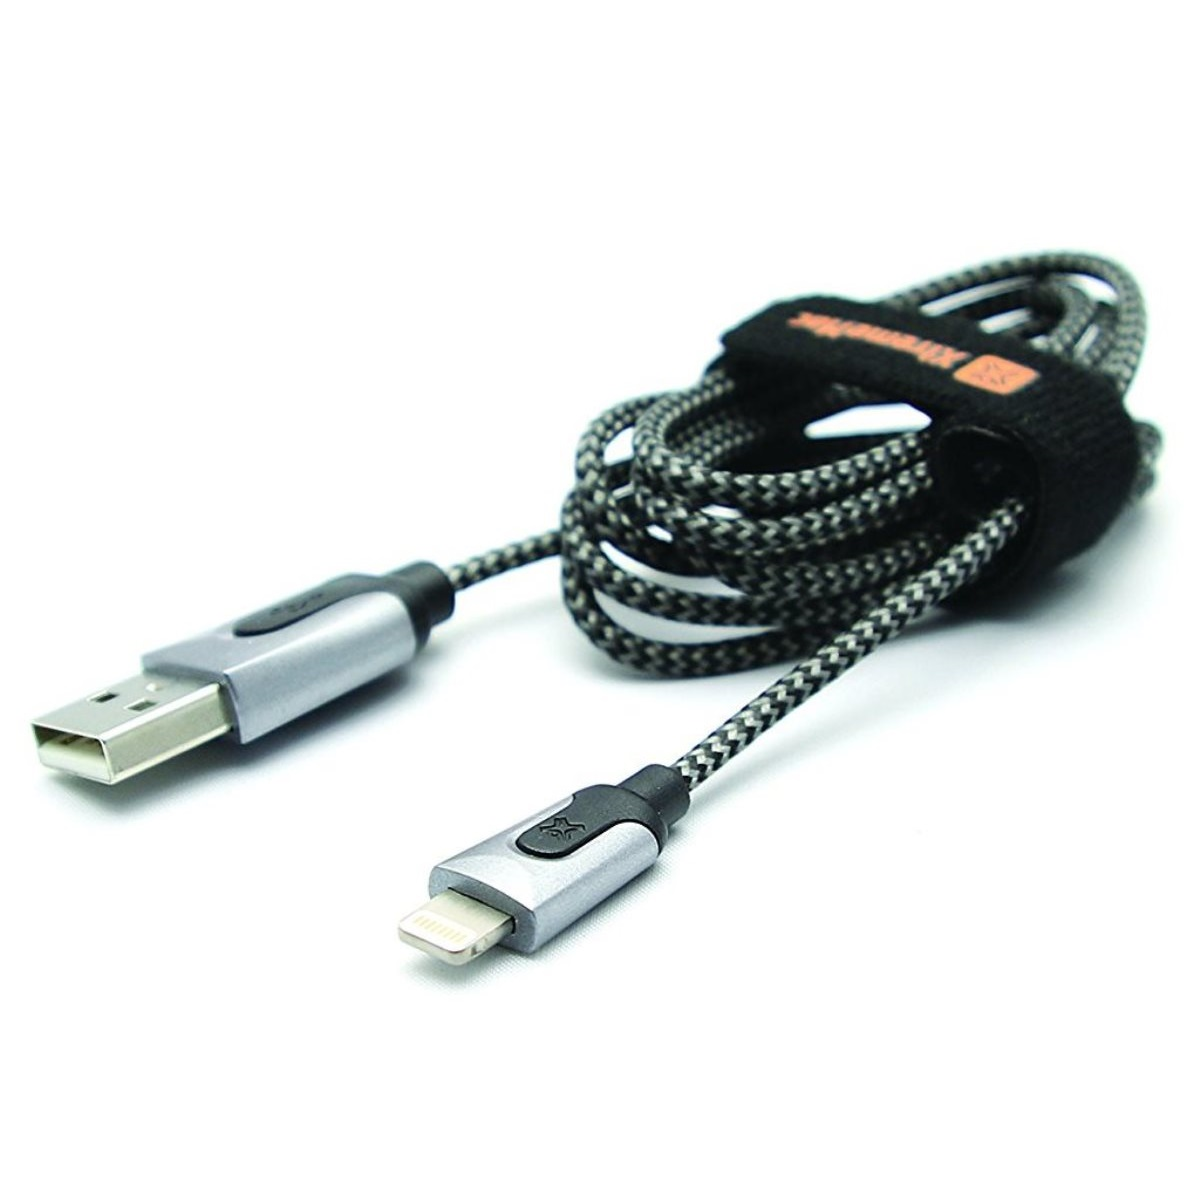 XTREME Lightning Cable Kabel, 1m Black Schwarz Lightning MAC